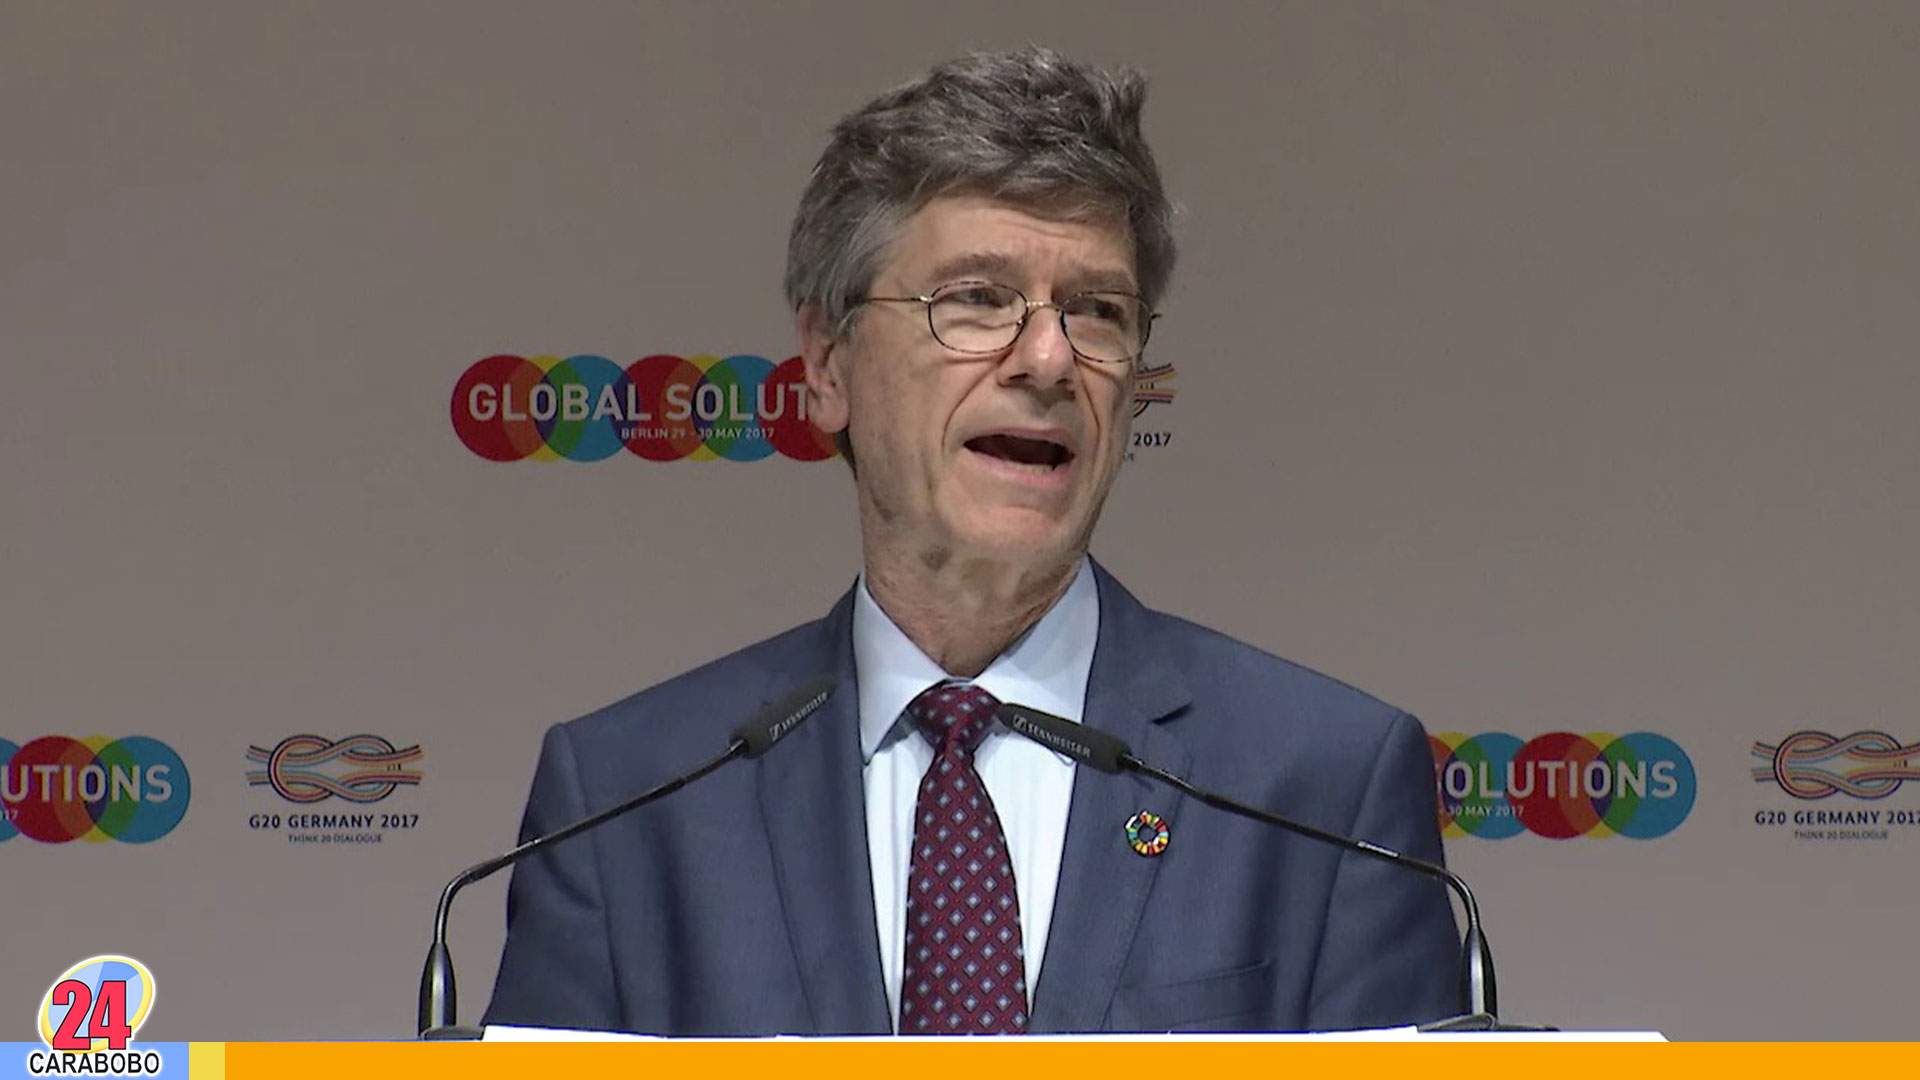 Jeffrey Sachs - Jeffrey Sachs